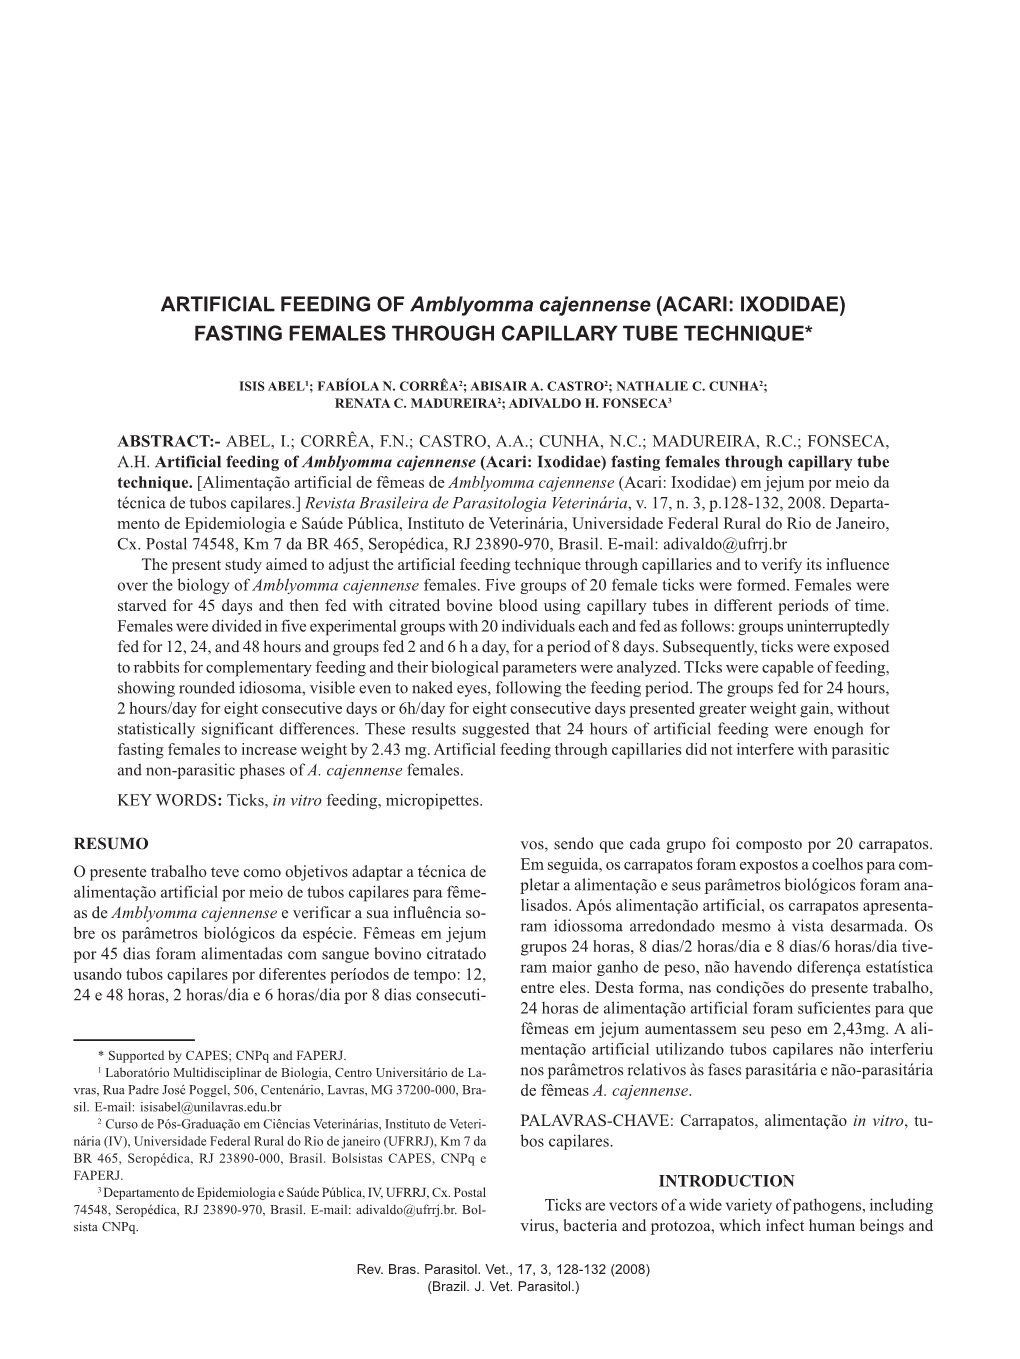 ARTIFICIAL FEEDING of Amblyomma Cajennense (ACARI: IXODIDAE) FASTING FEMALES THROUGH CAPILLARY TUBE TECHNIQUE*